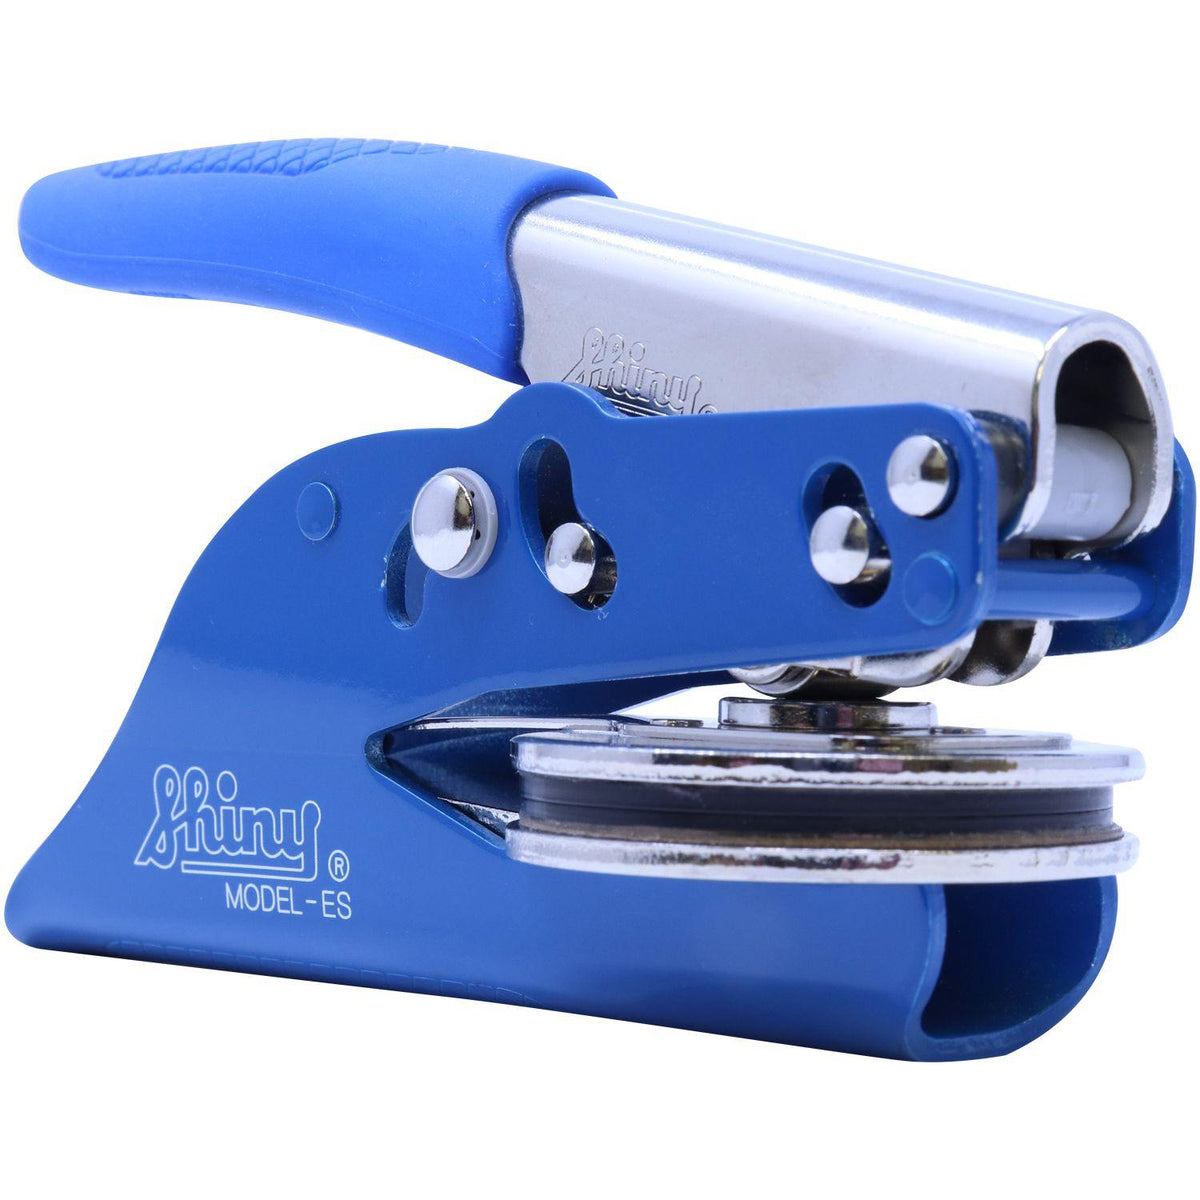 Interior Designer Blue Soft Seal Embosser - Engineer Seal Stamps - Embosser Type_Handheld, Embosser Type_Soft Seal, Type of Use_Professional